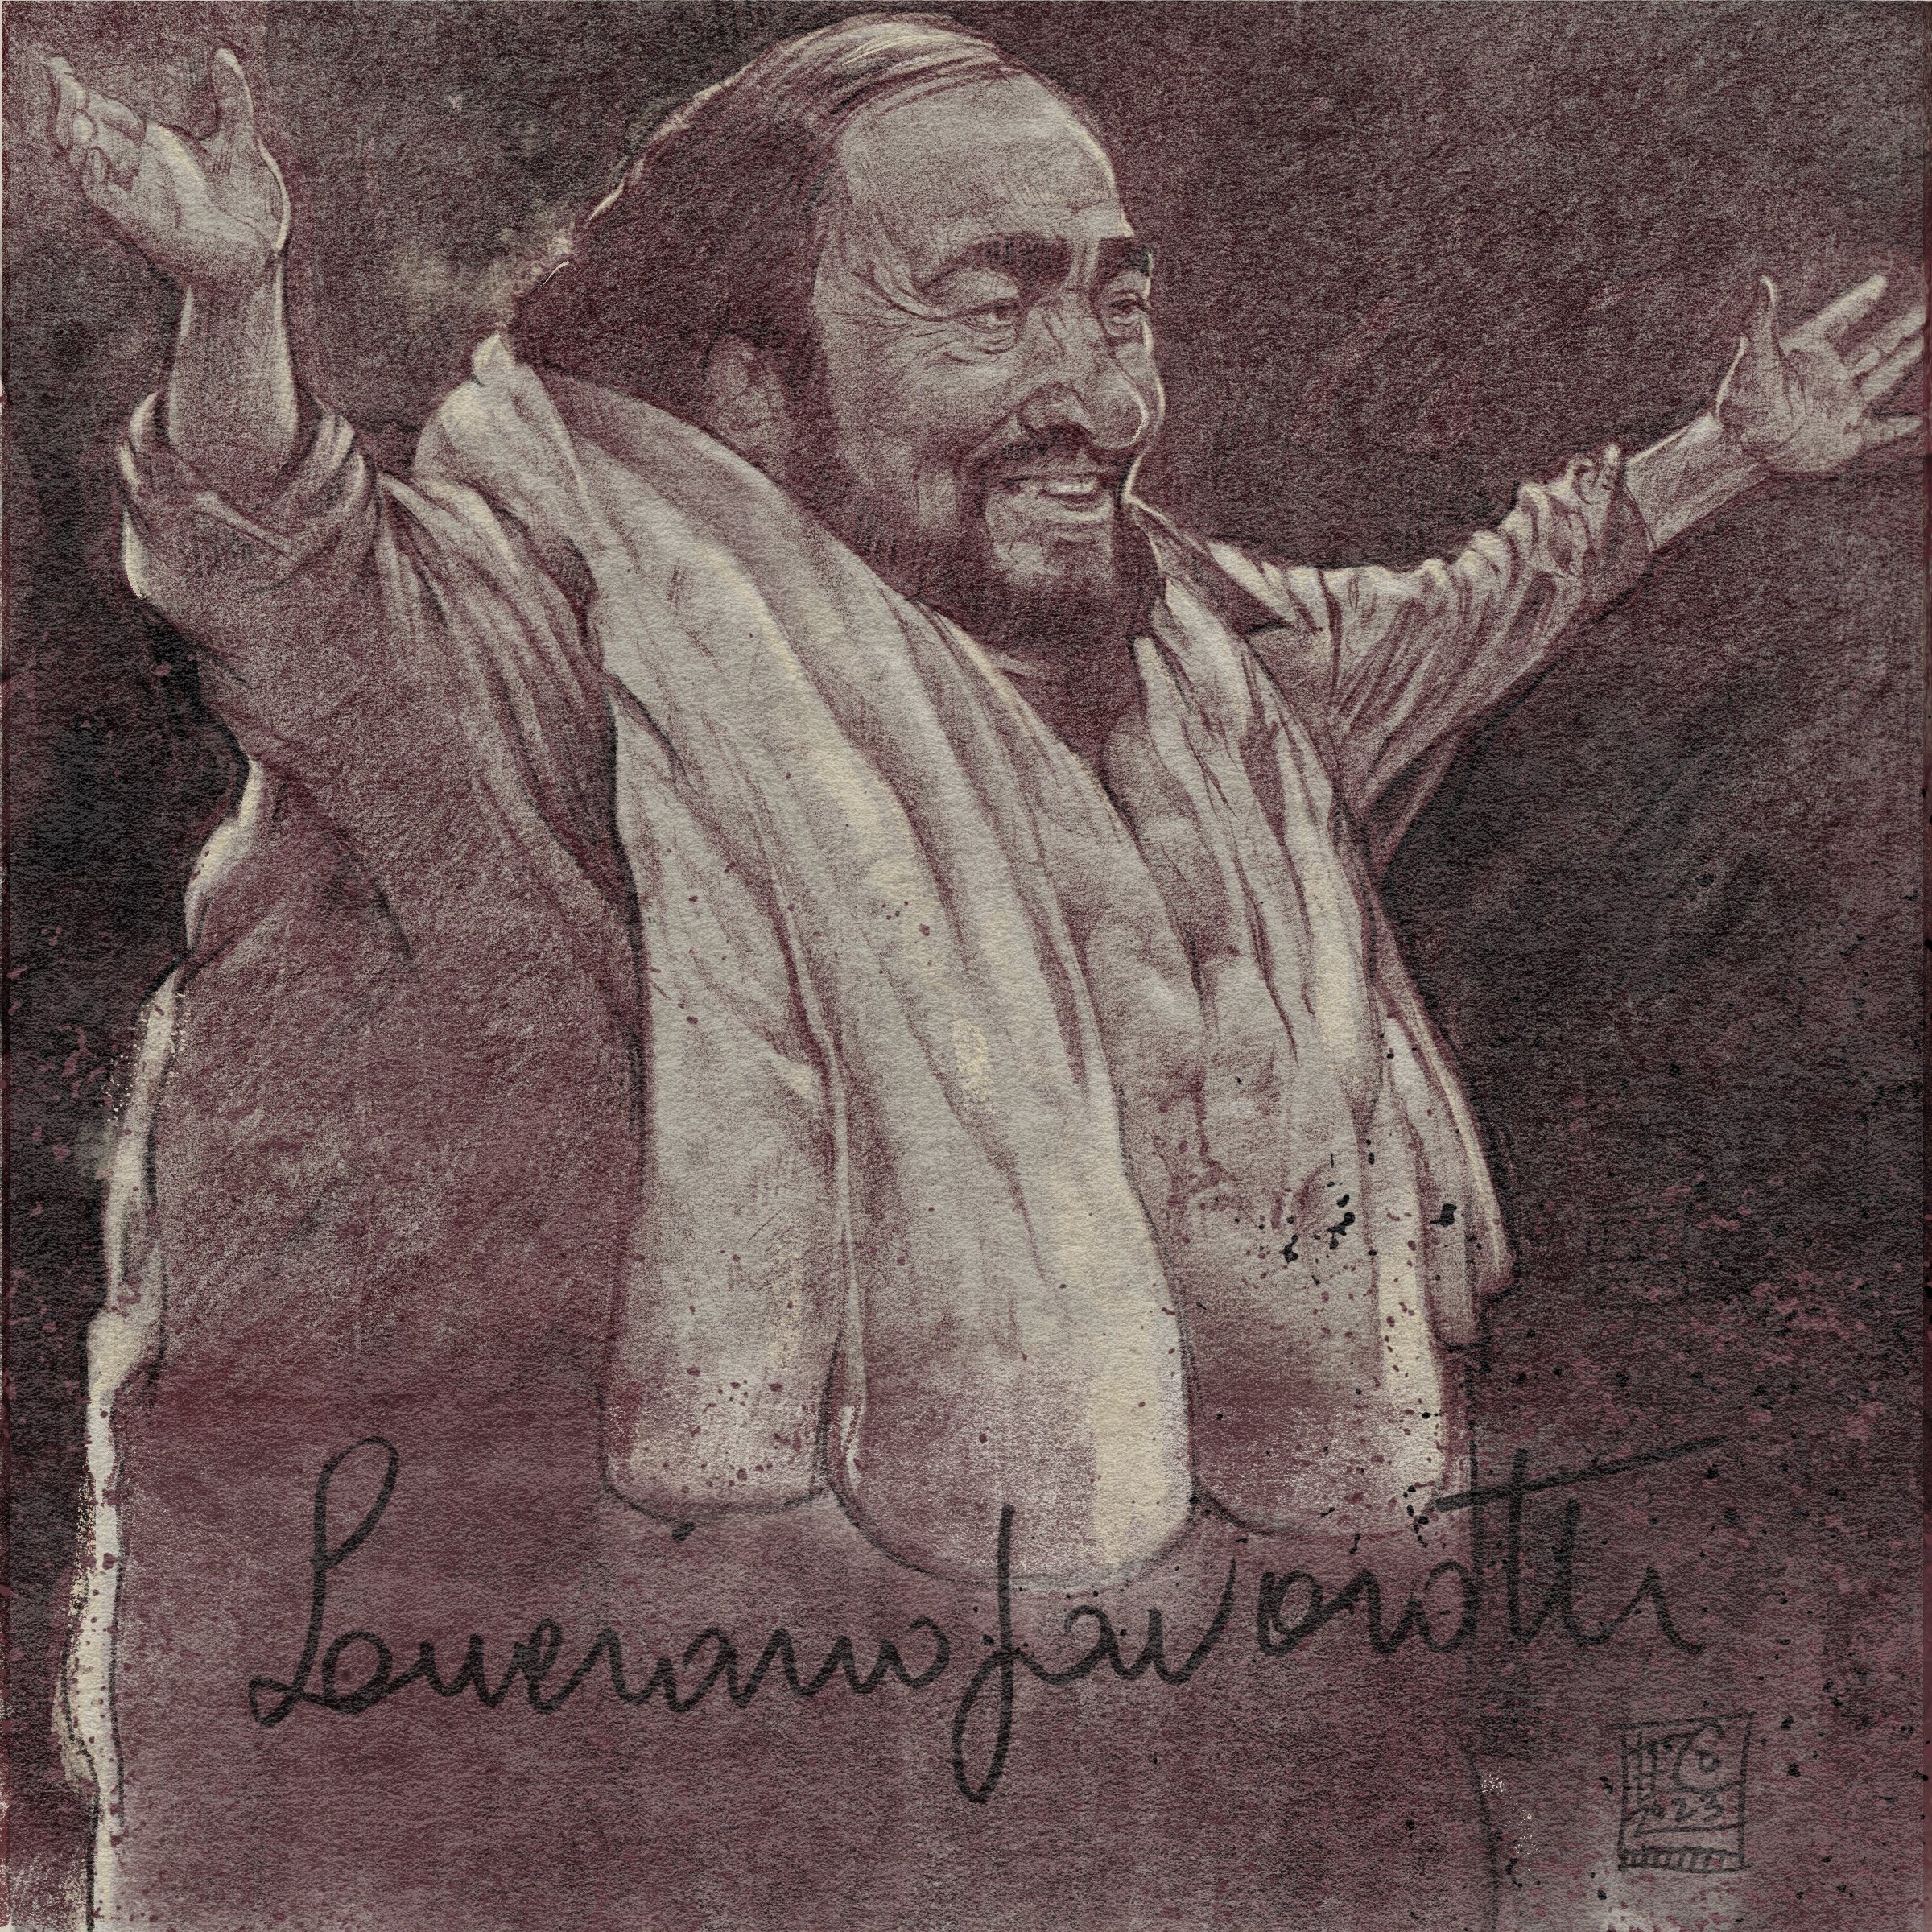 Luciano Pavarotti - October 12, 1935